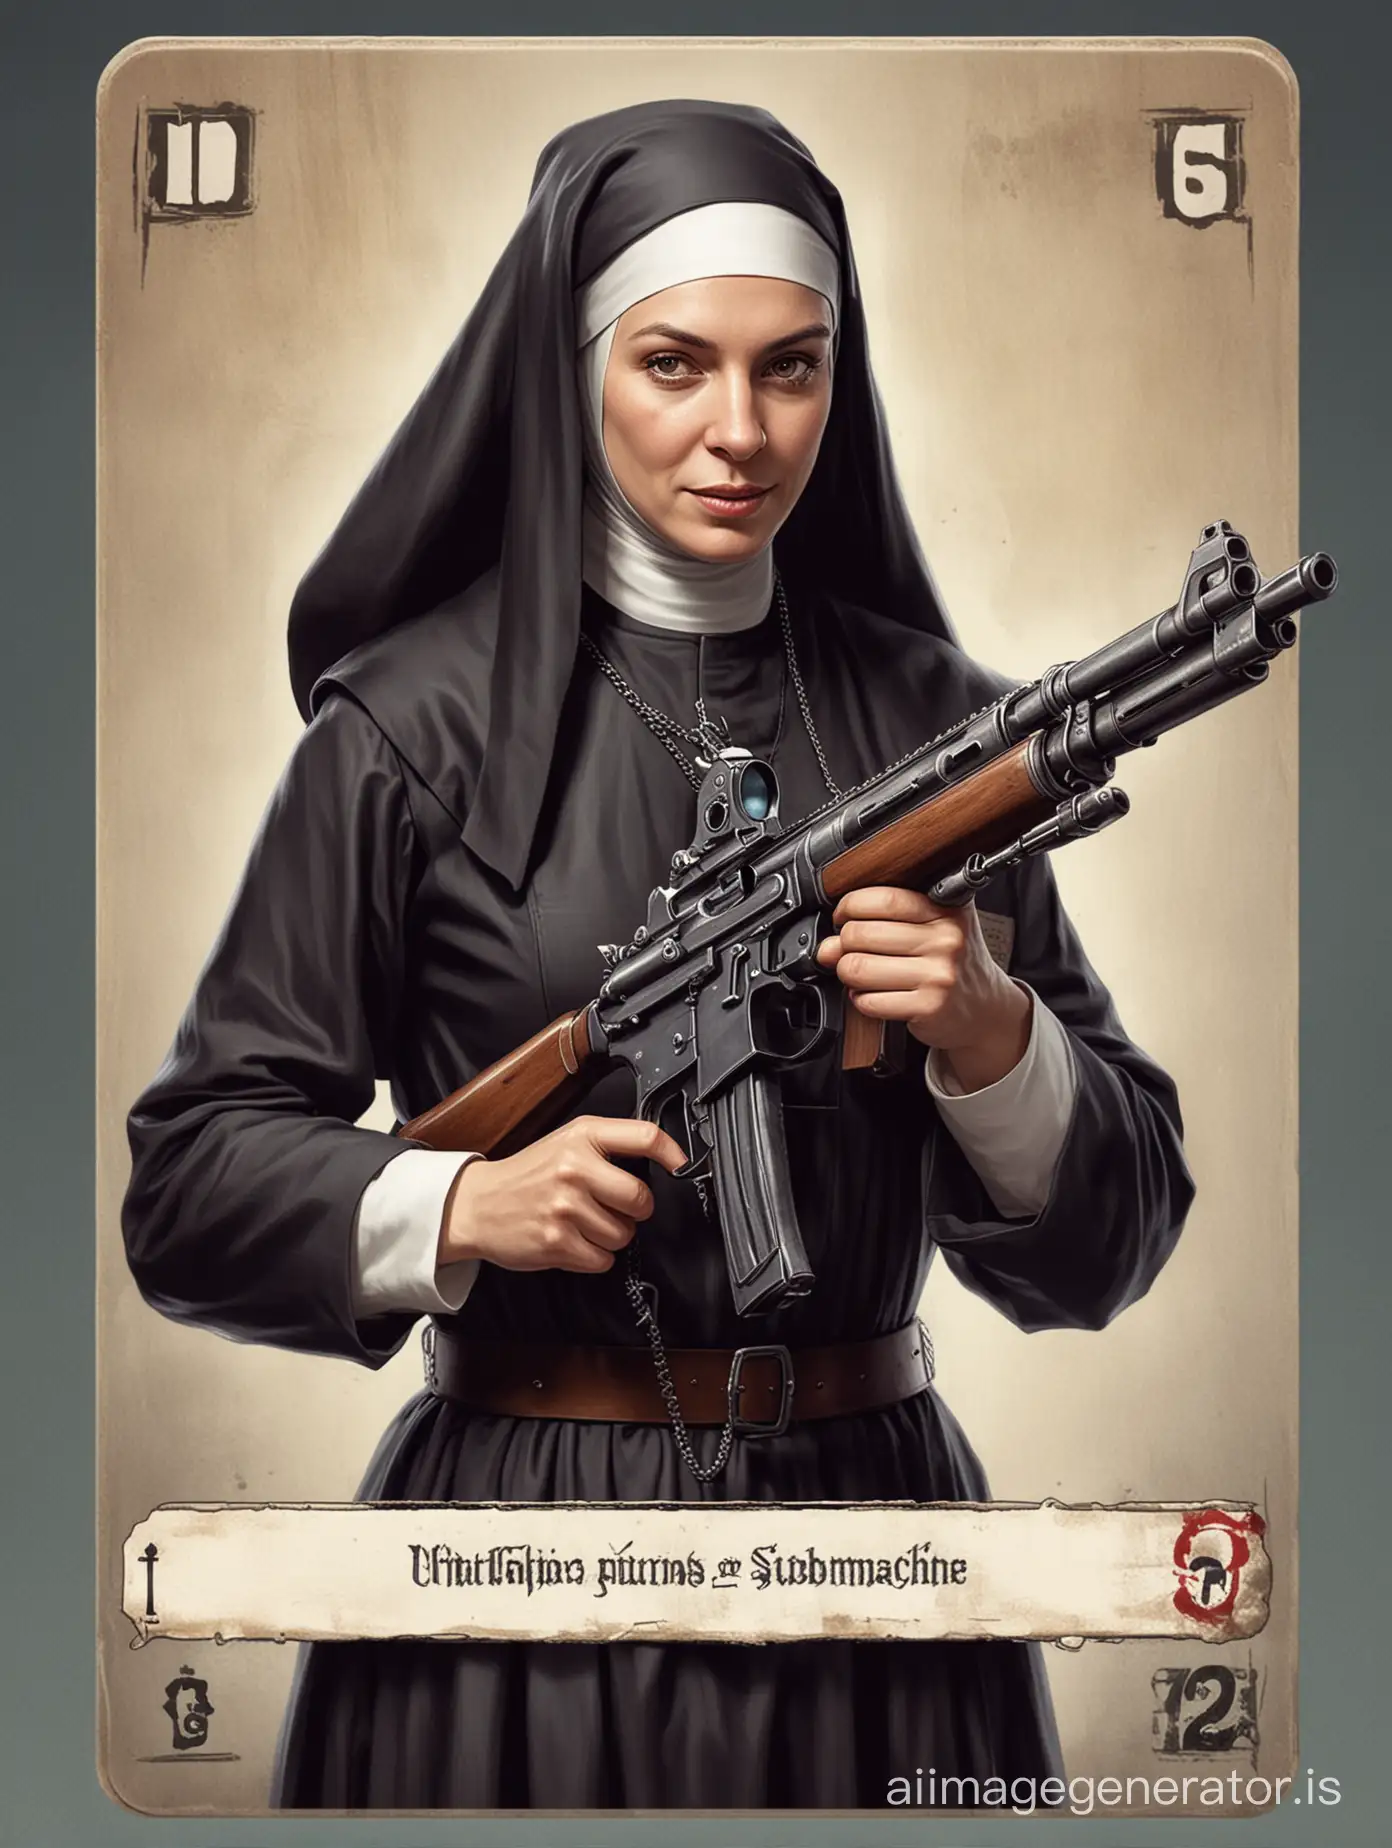 create a board game card depicting a nun with a submachine gun